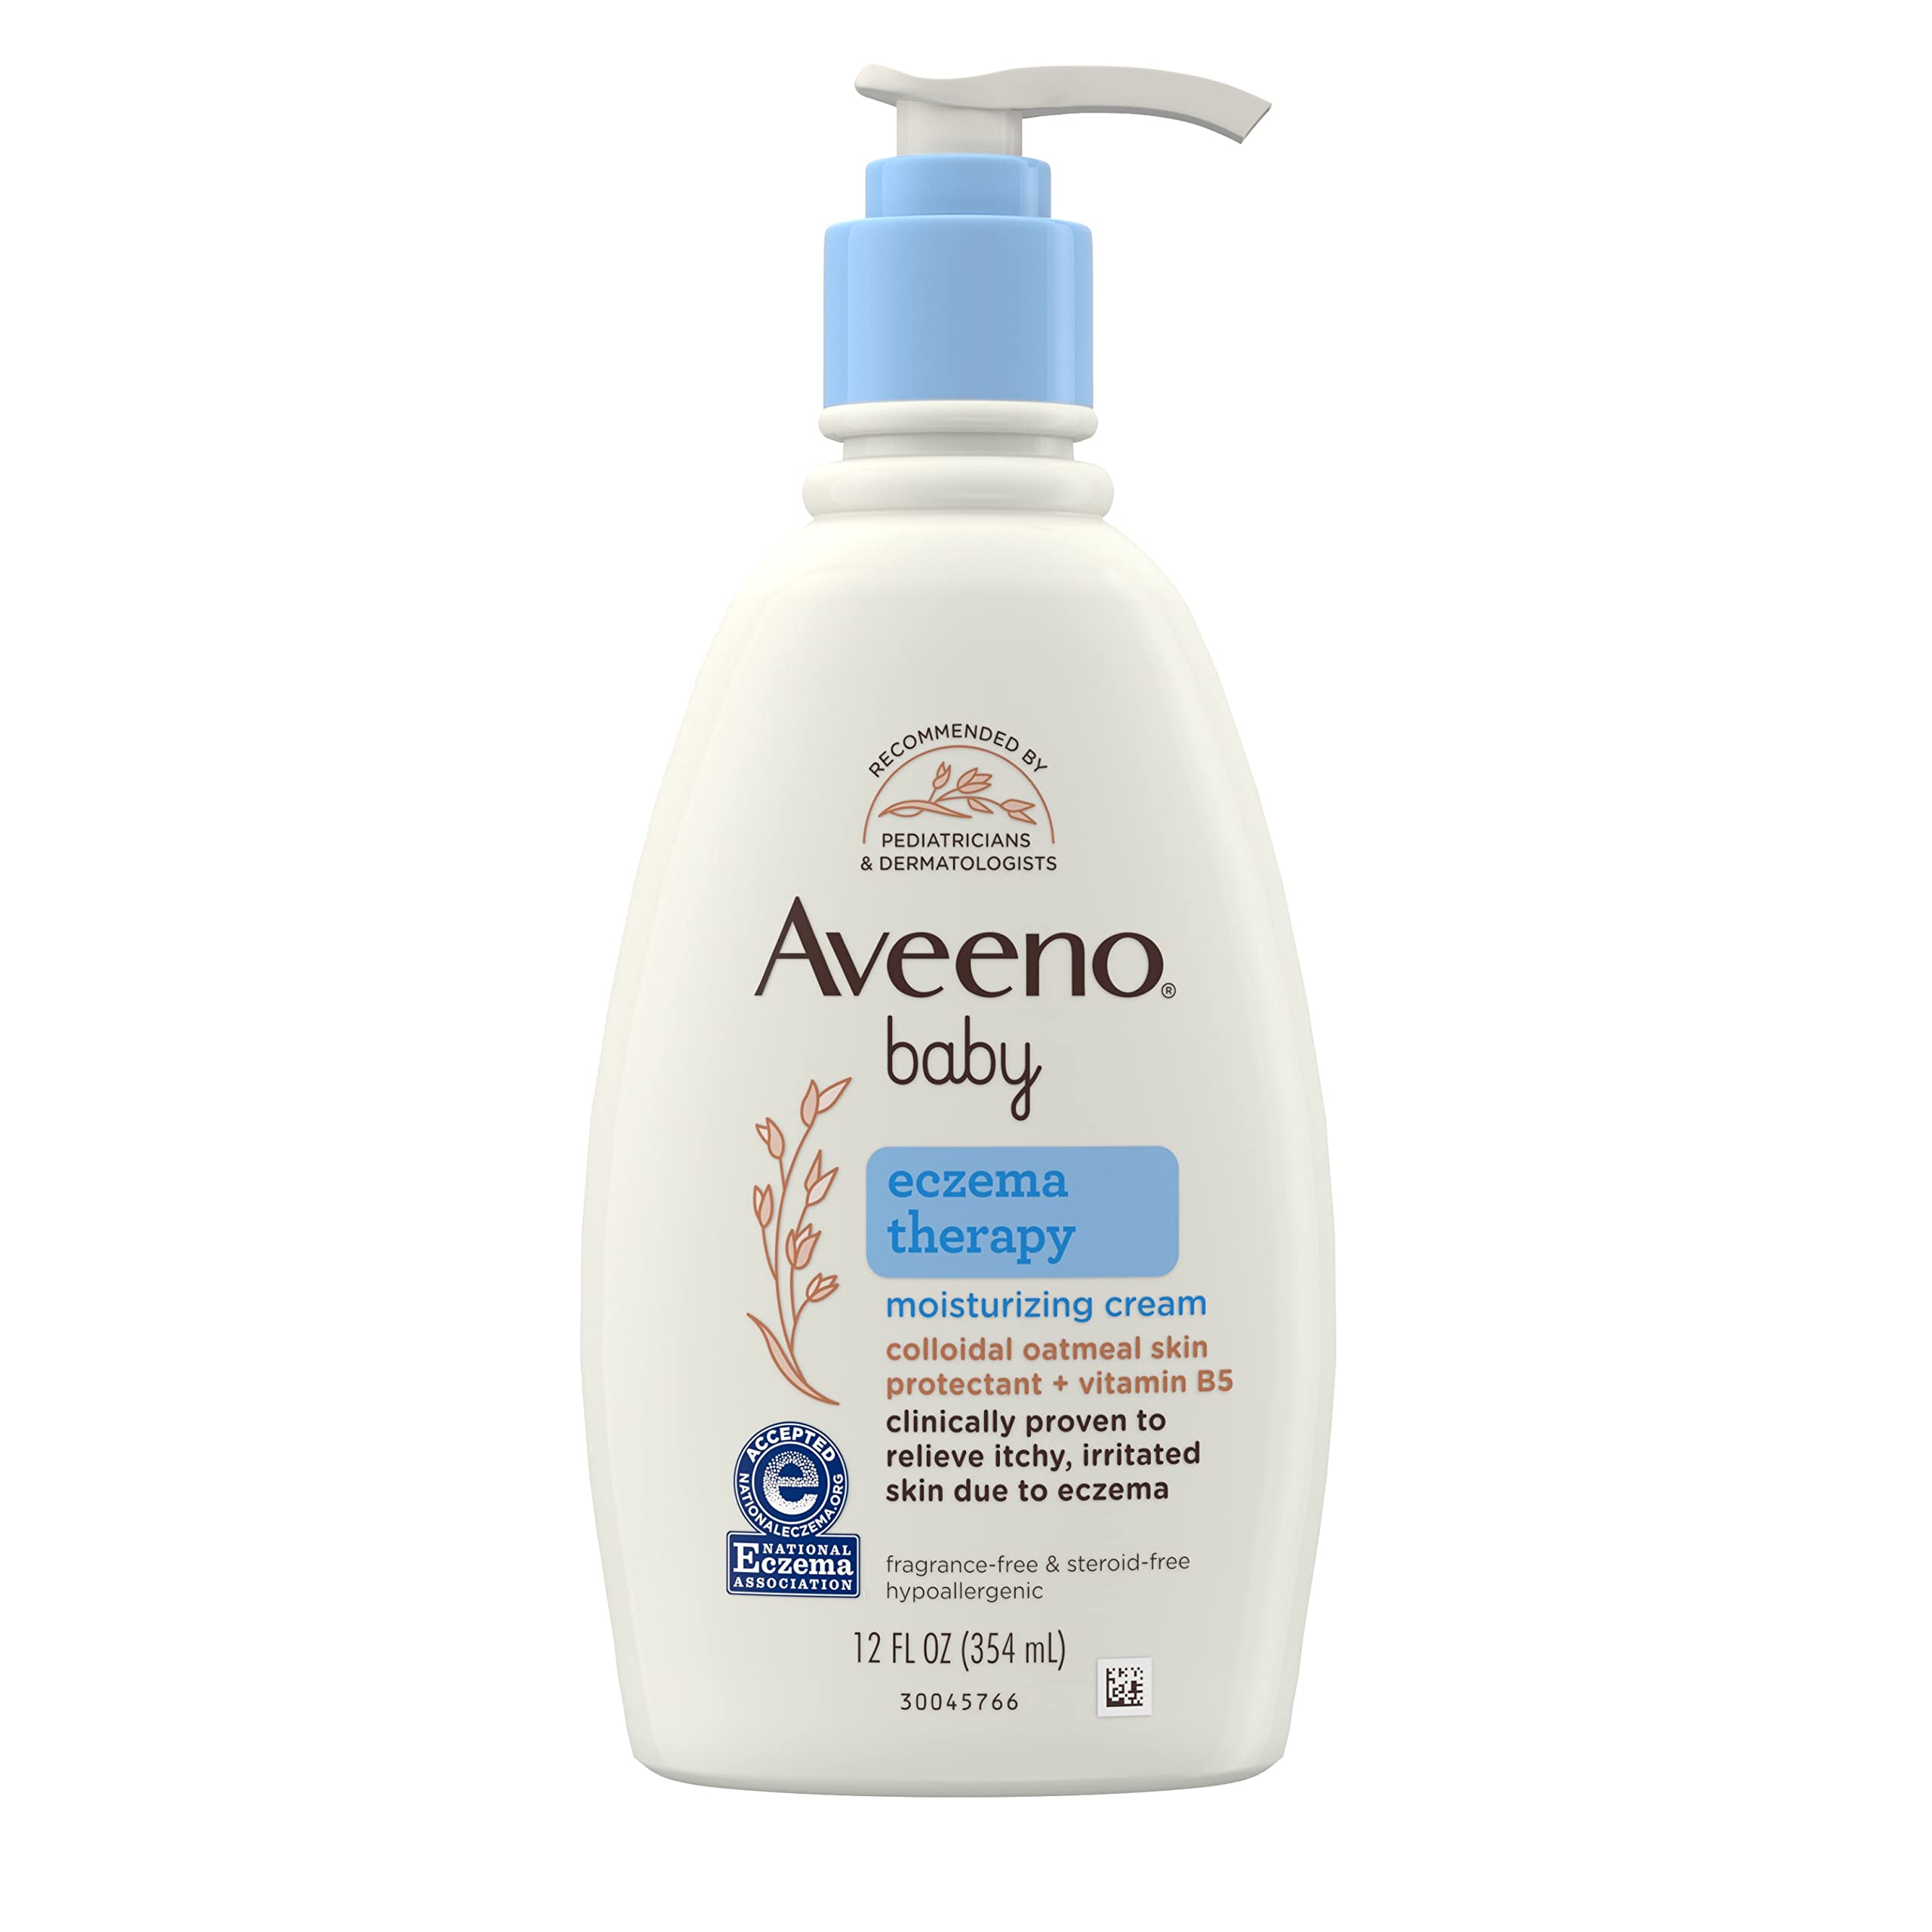 Aveeno Baby Eczema Therapy Moisturizing Cream, Natural Colloidal Oatmeal & Vitamin B5, Moisturizes & Relieves Dry, Itchy, Irrita